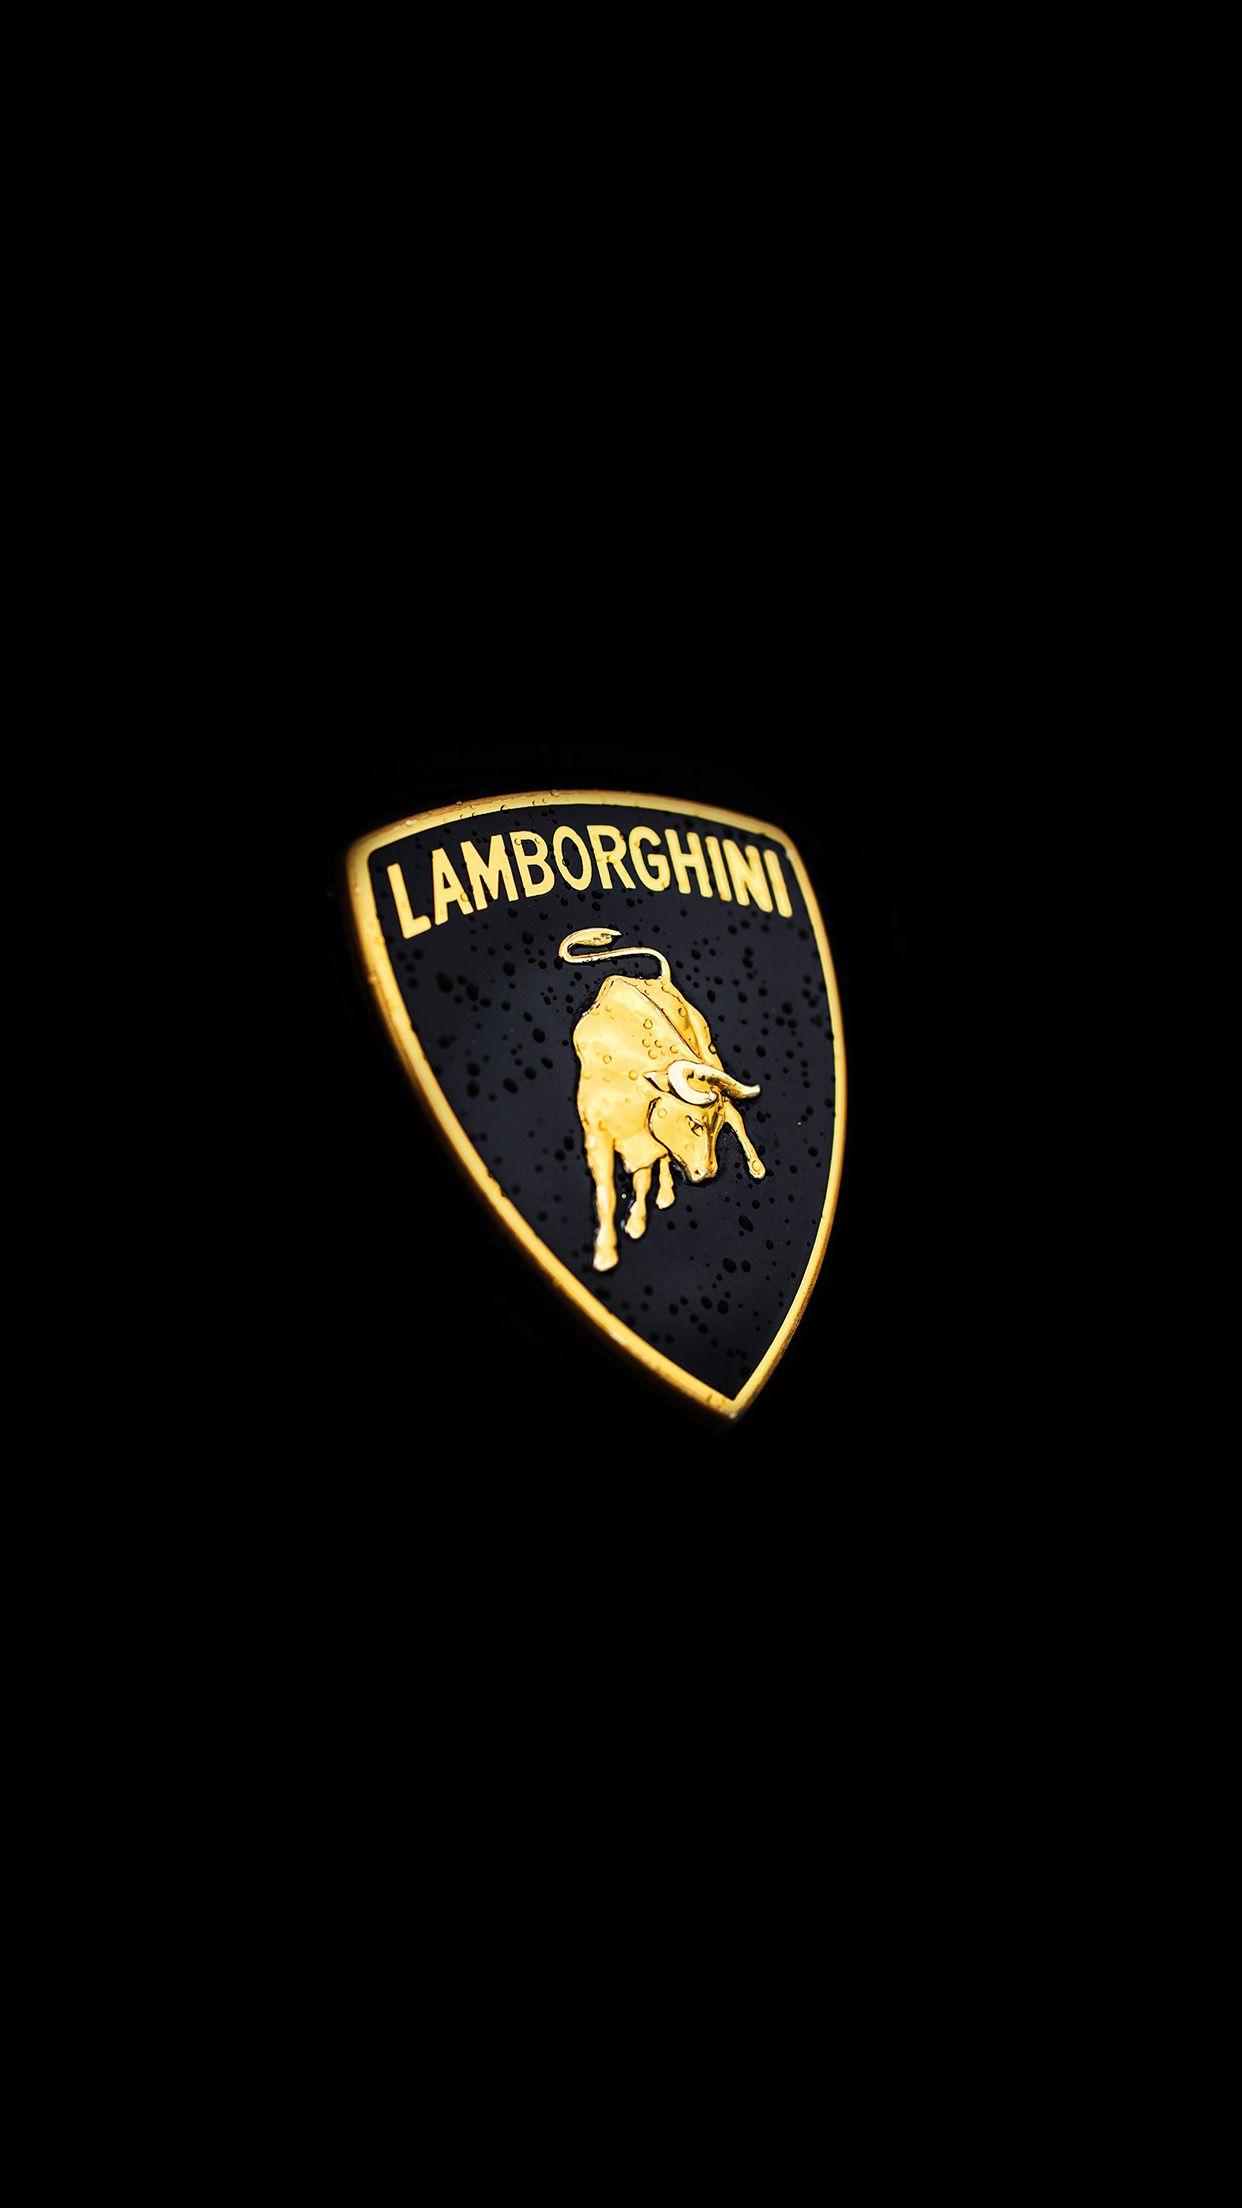 Lamborghini Logo Black Background Android Wallpaper free download